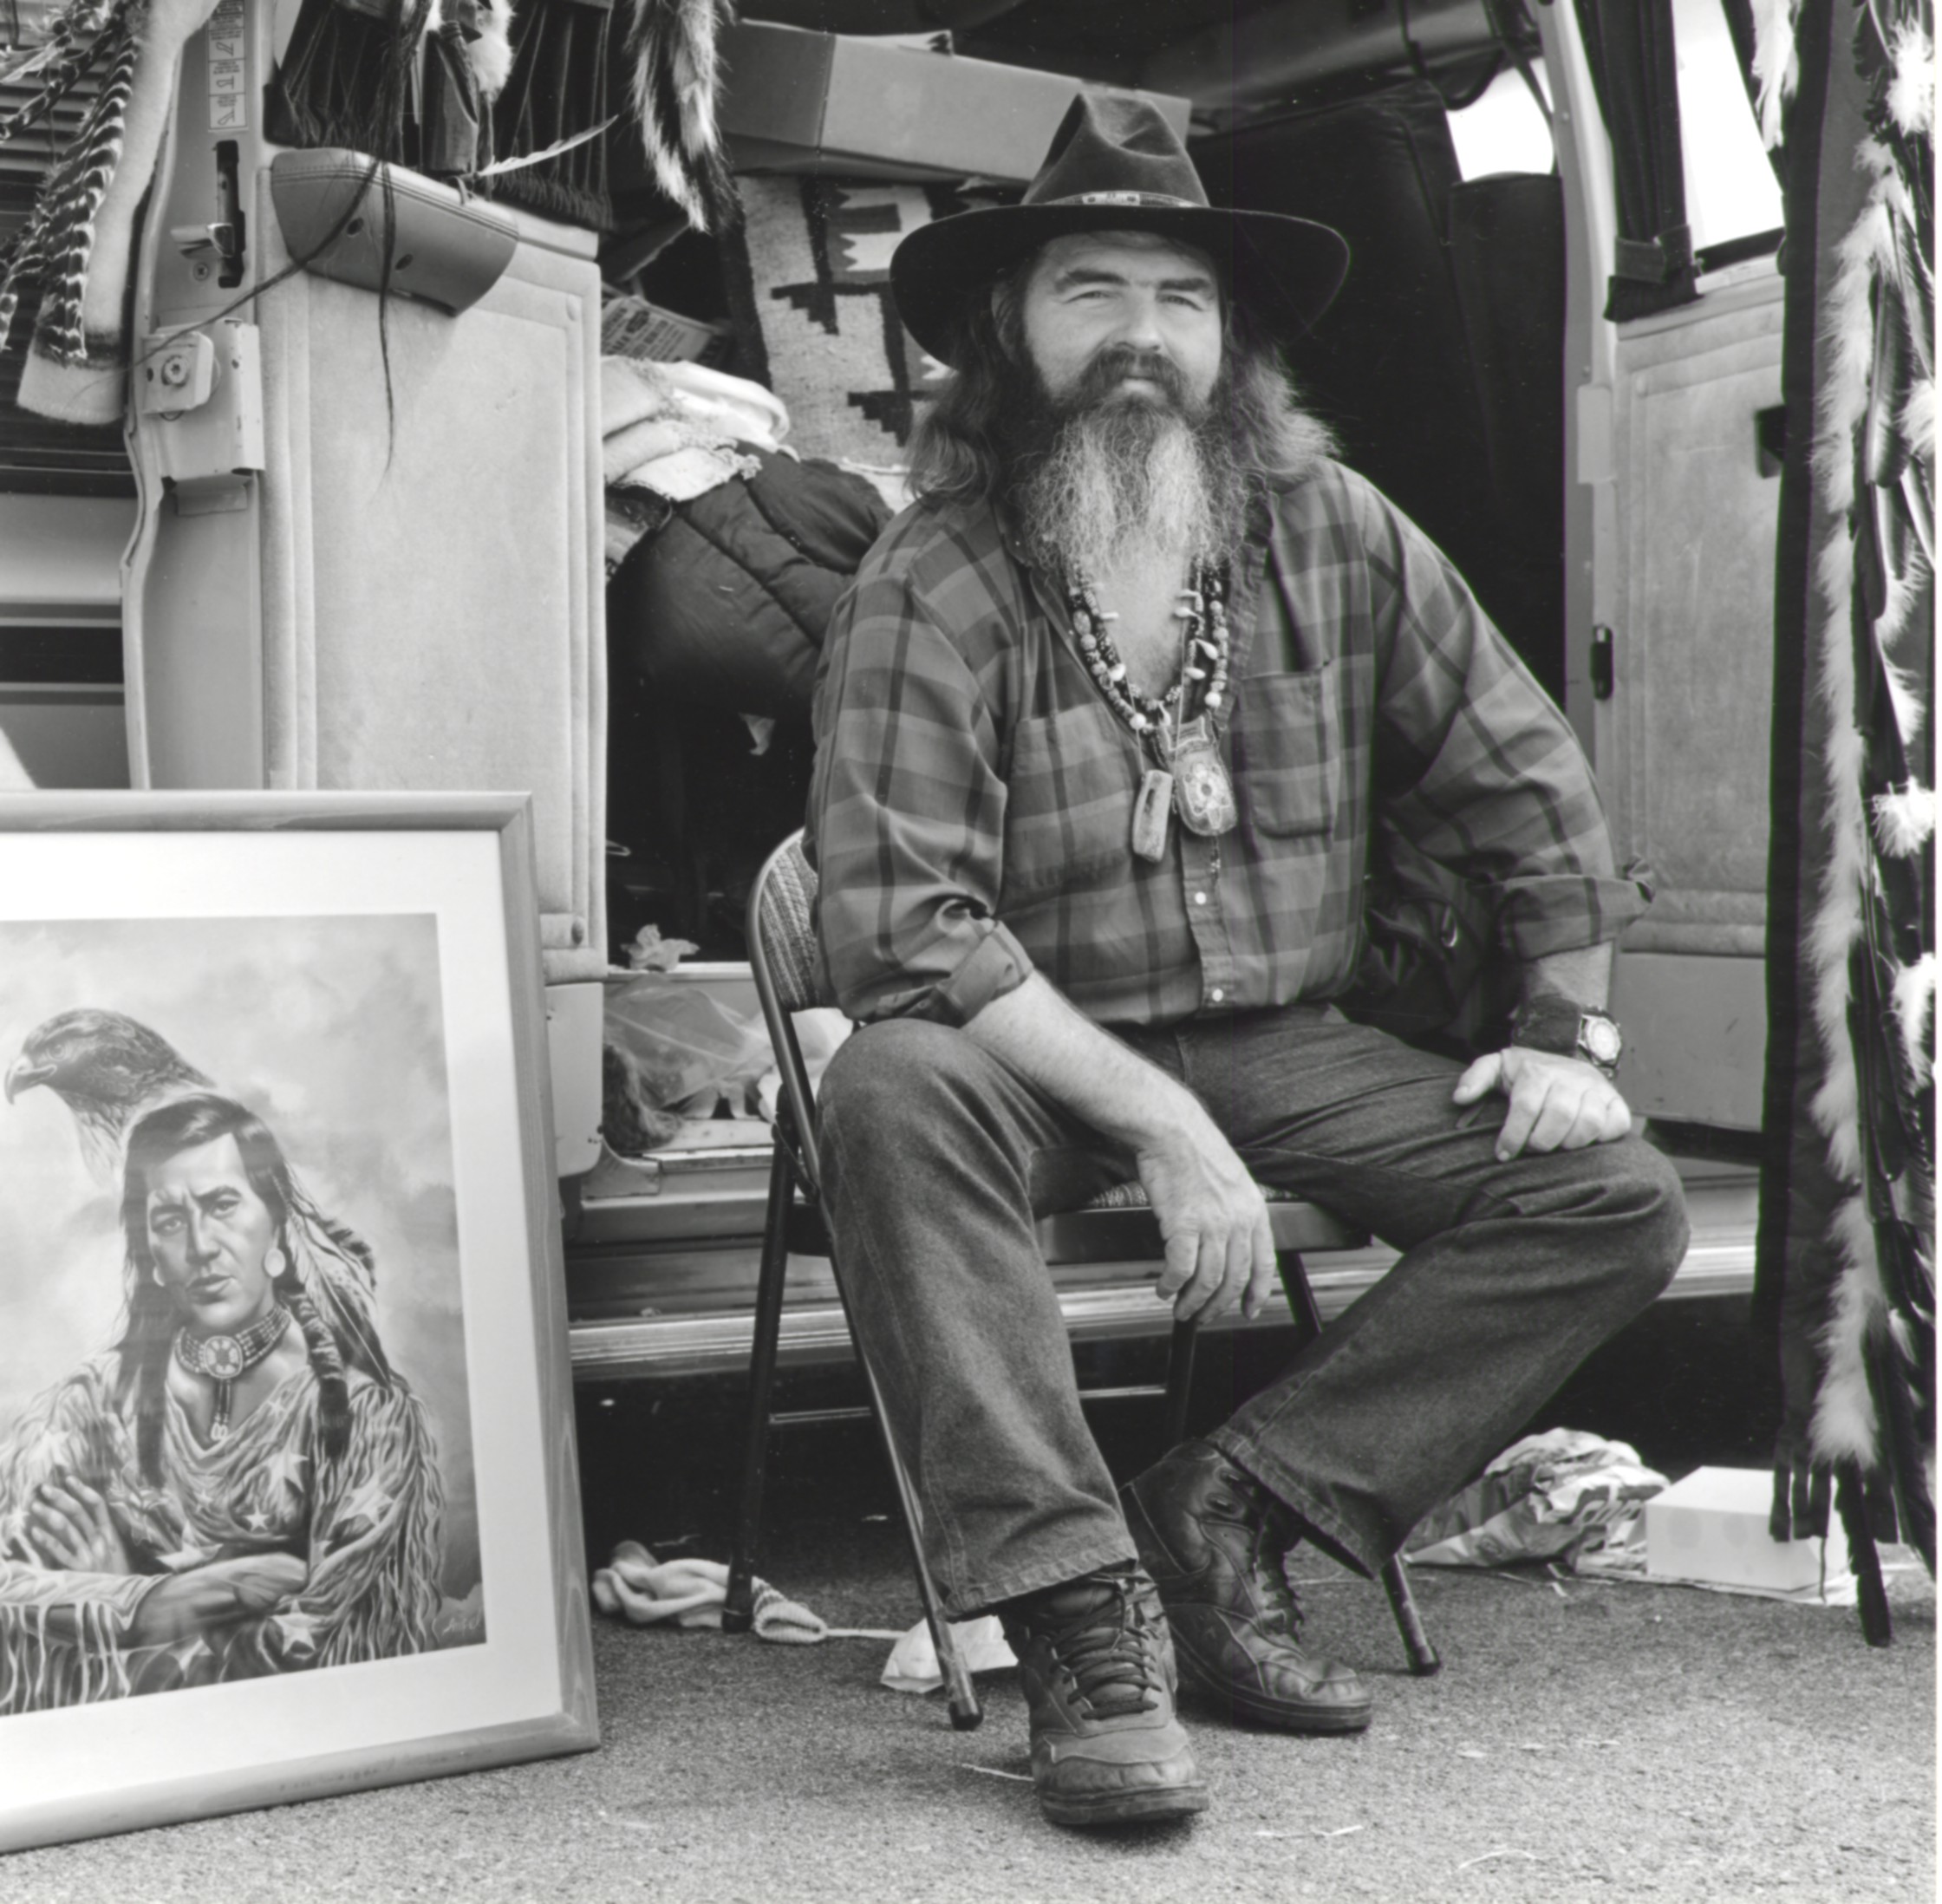 Vendor Selling Western Art - Pasadena CA 1995